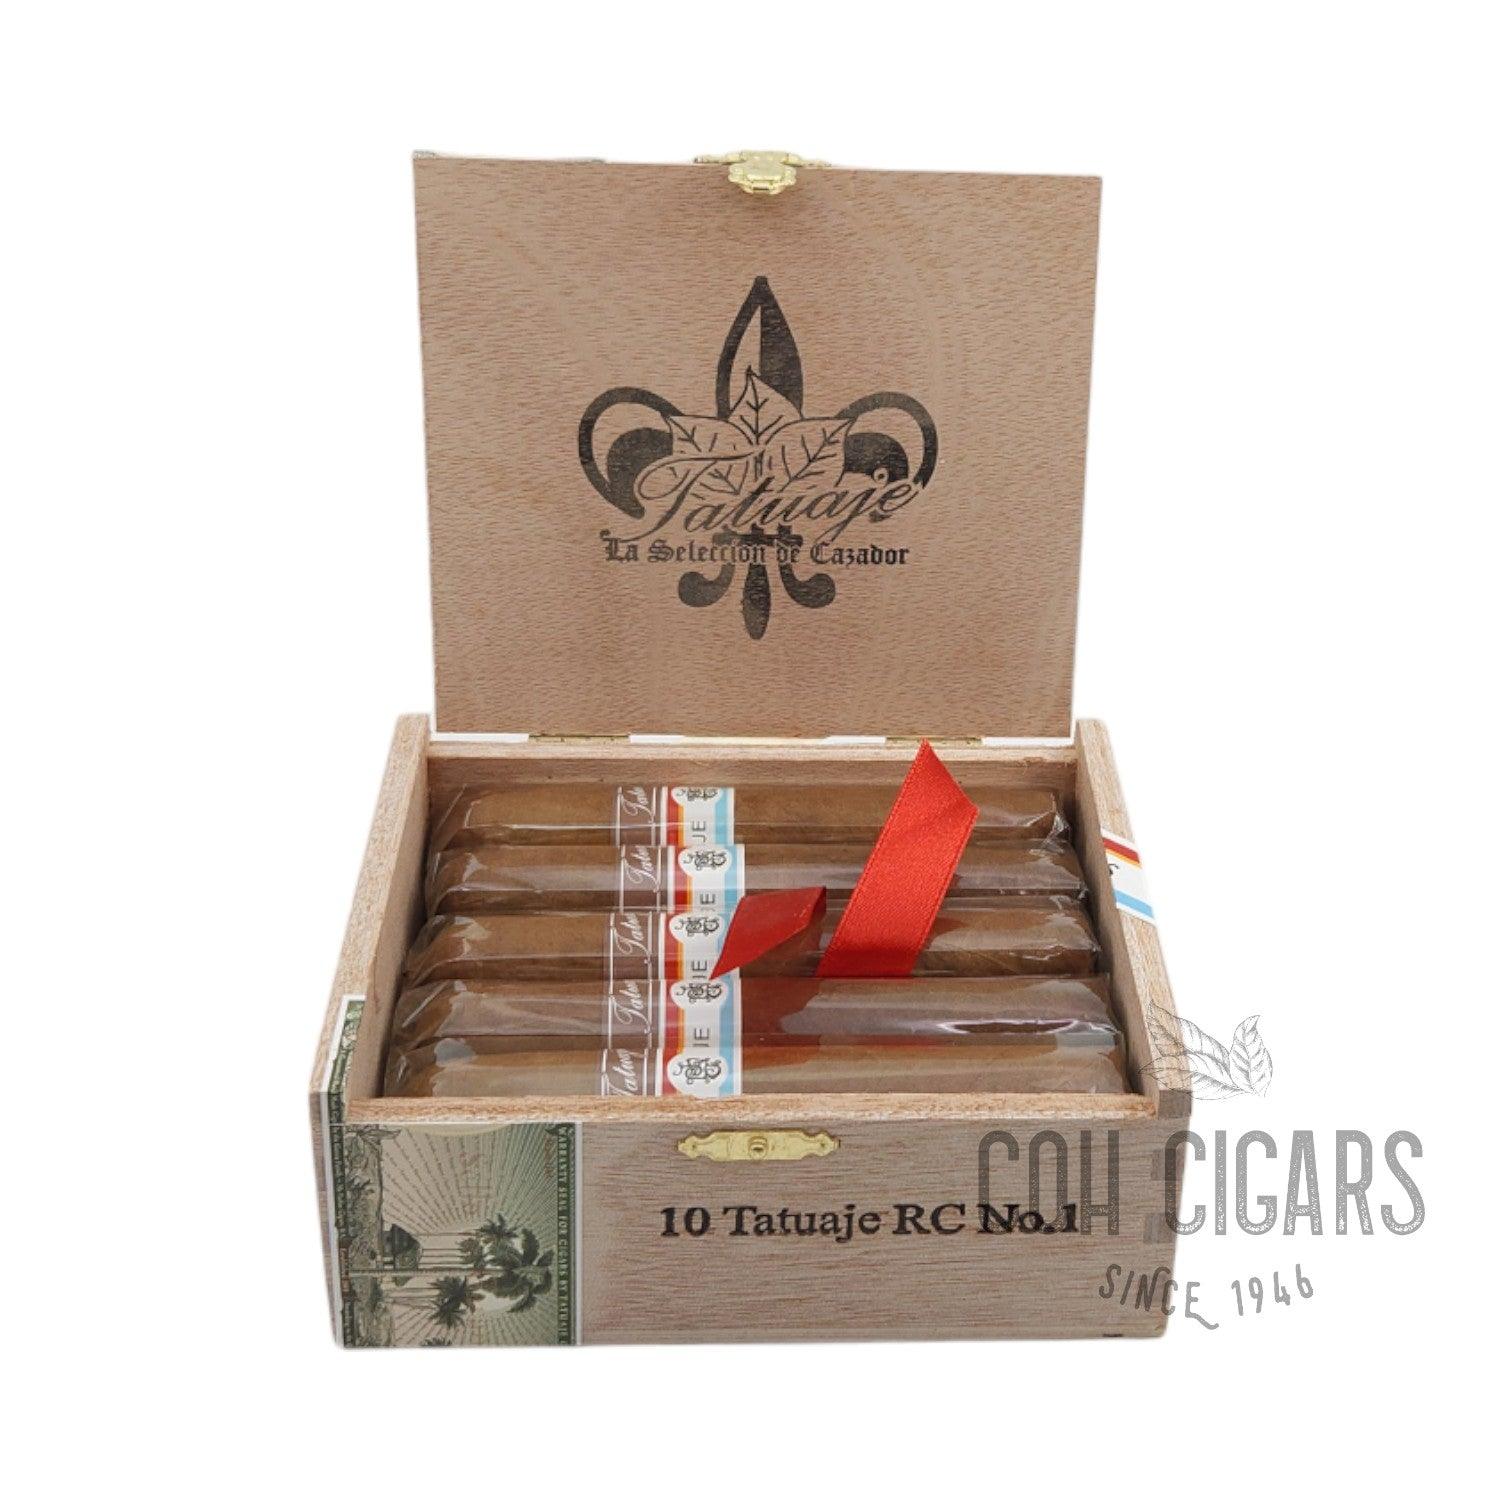 Tatuaje Cigar | La Seleccion De Cazabor RC No.1 | Box 10 - HK CohCigars